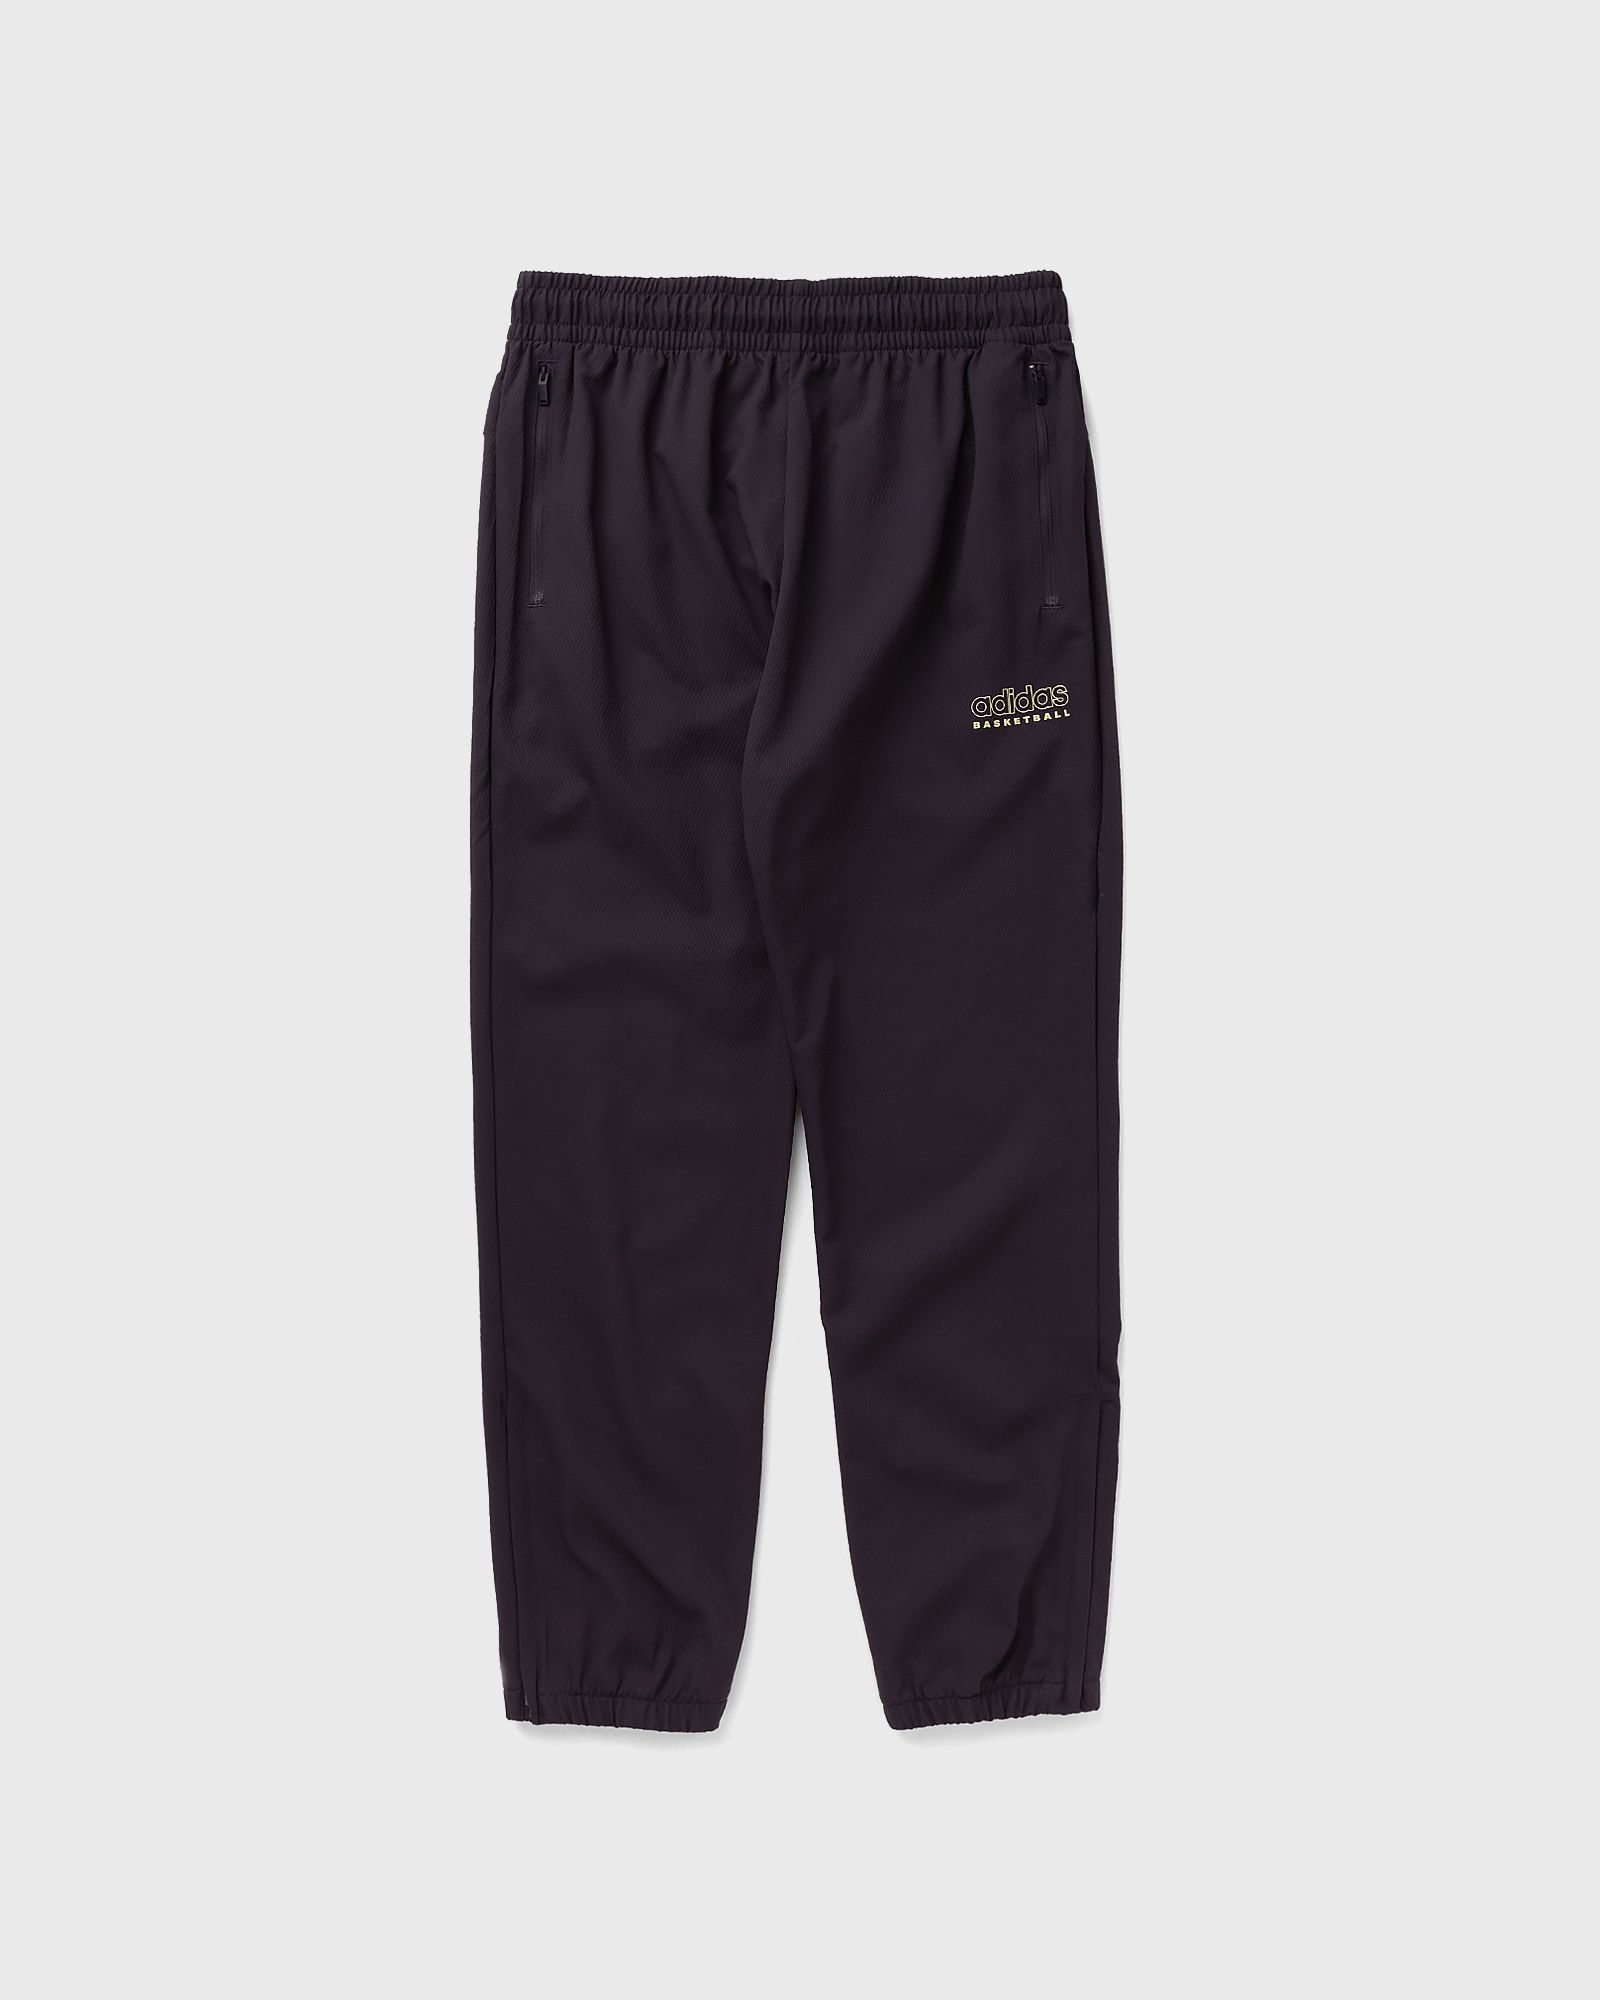 Adidas - select wv pants men sweatpants black in größe:xxl